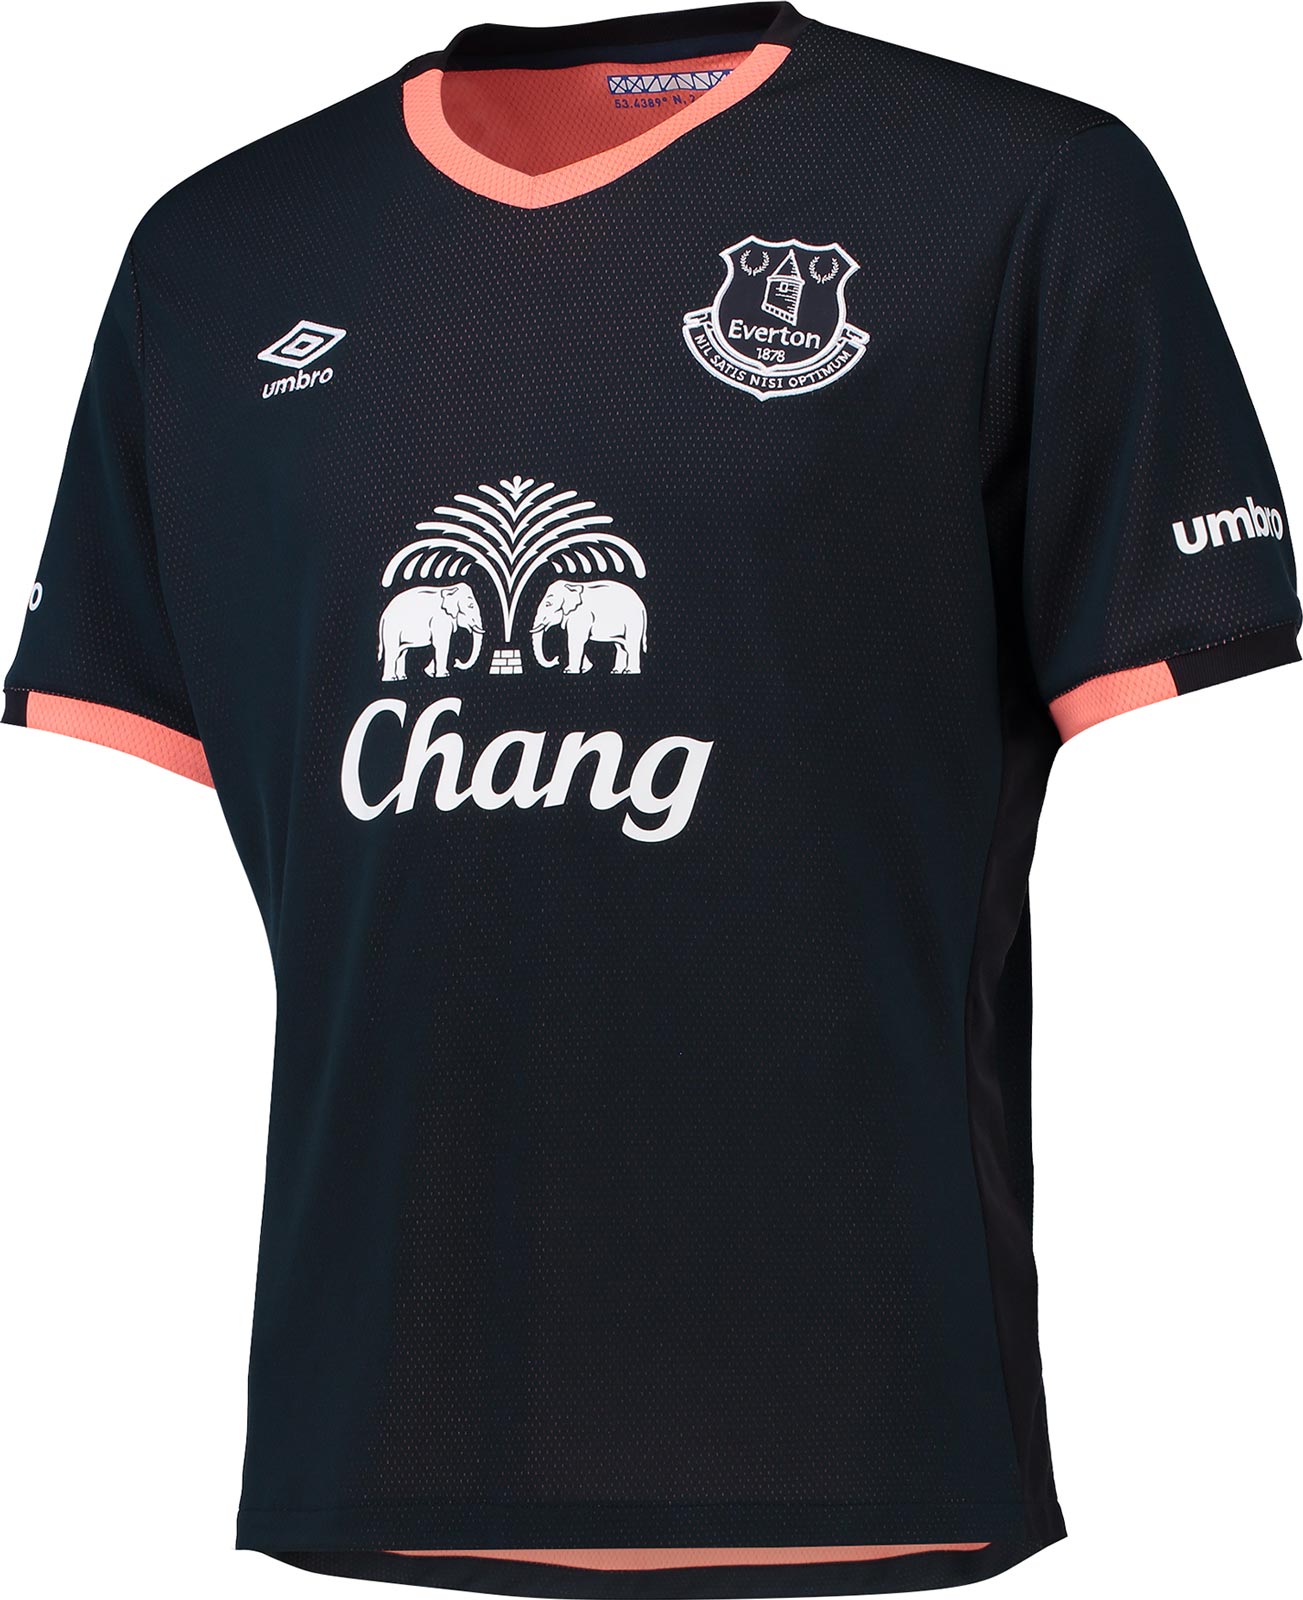 Everton 16-17 Away Kit Released - Footy Headlines